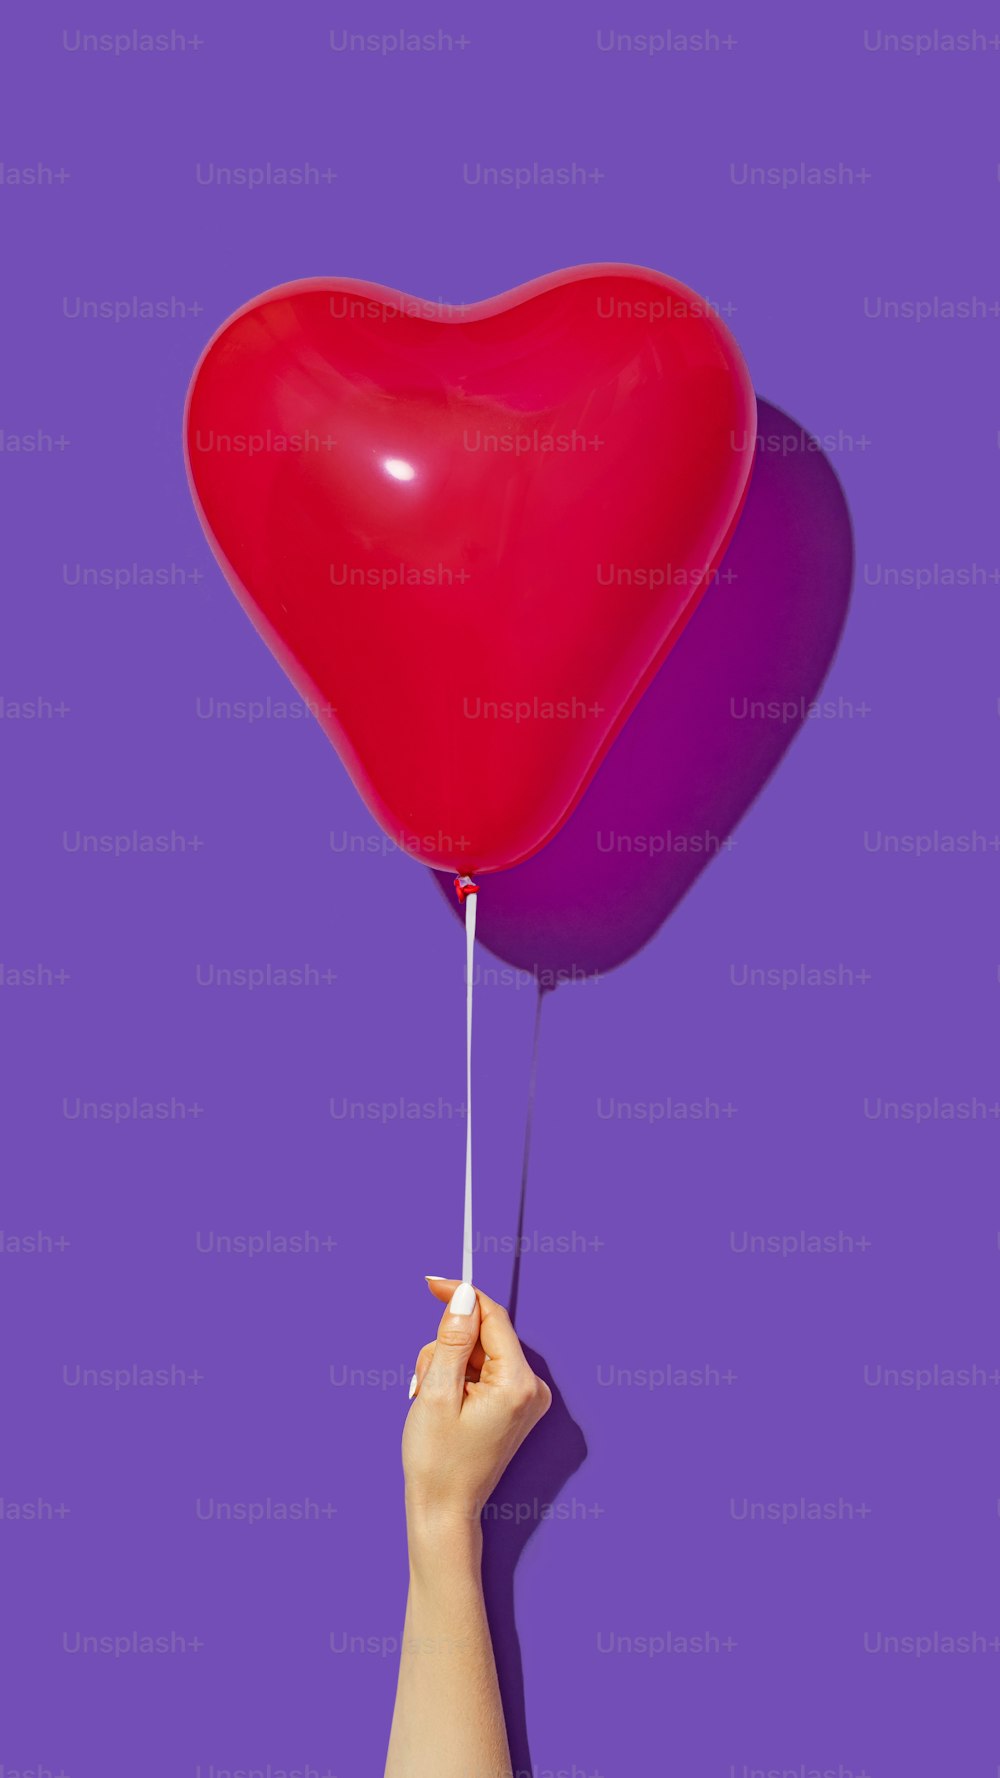 Balon Pictures  Download Free Images on Unsplash